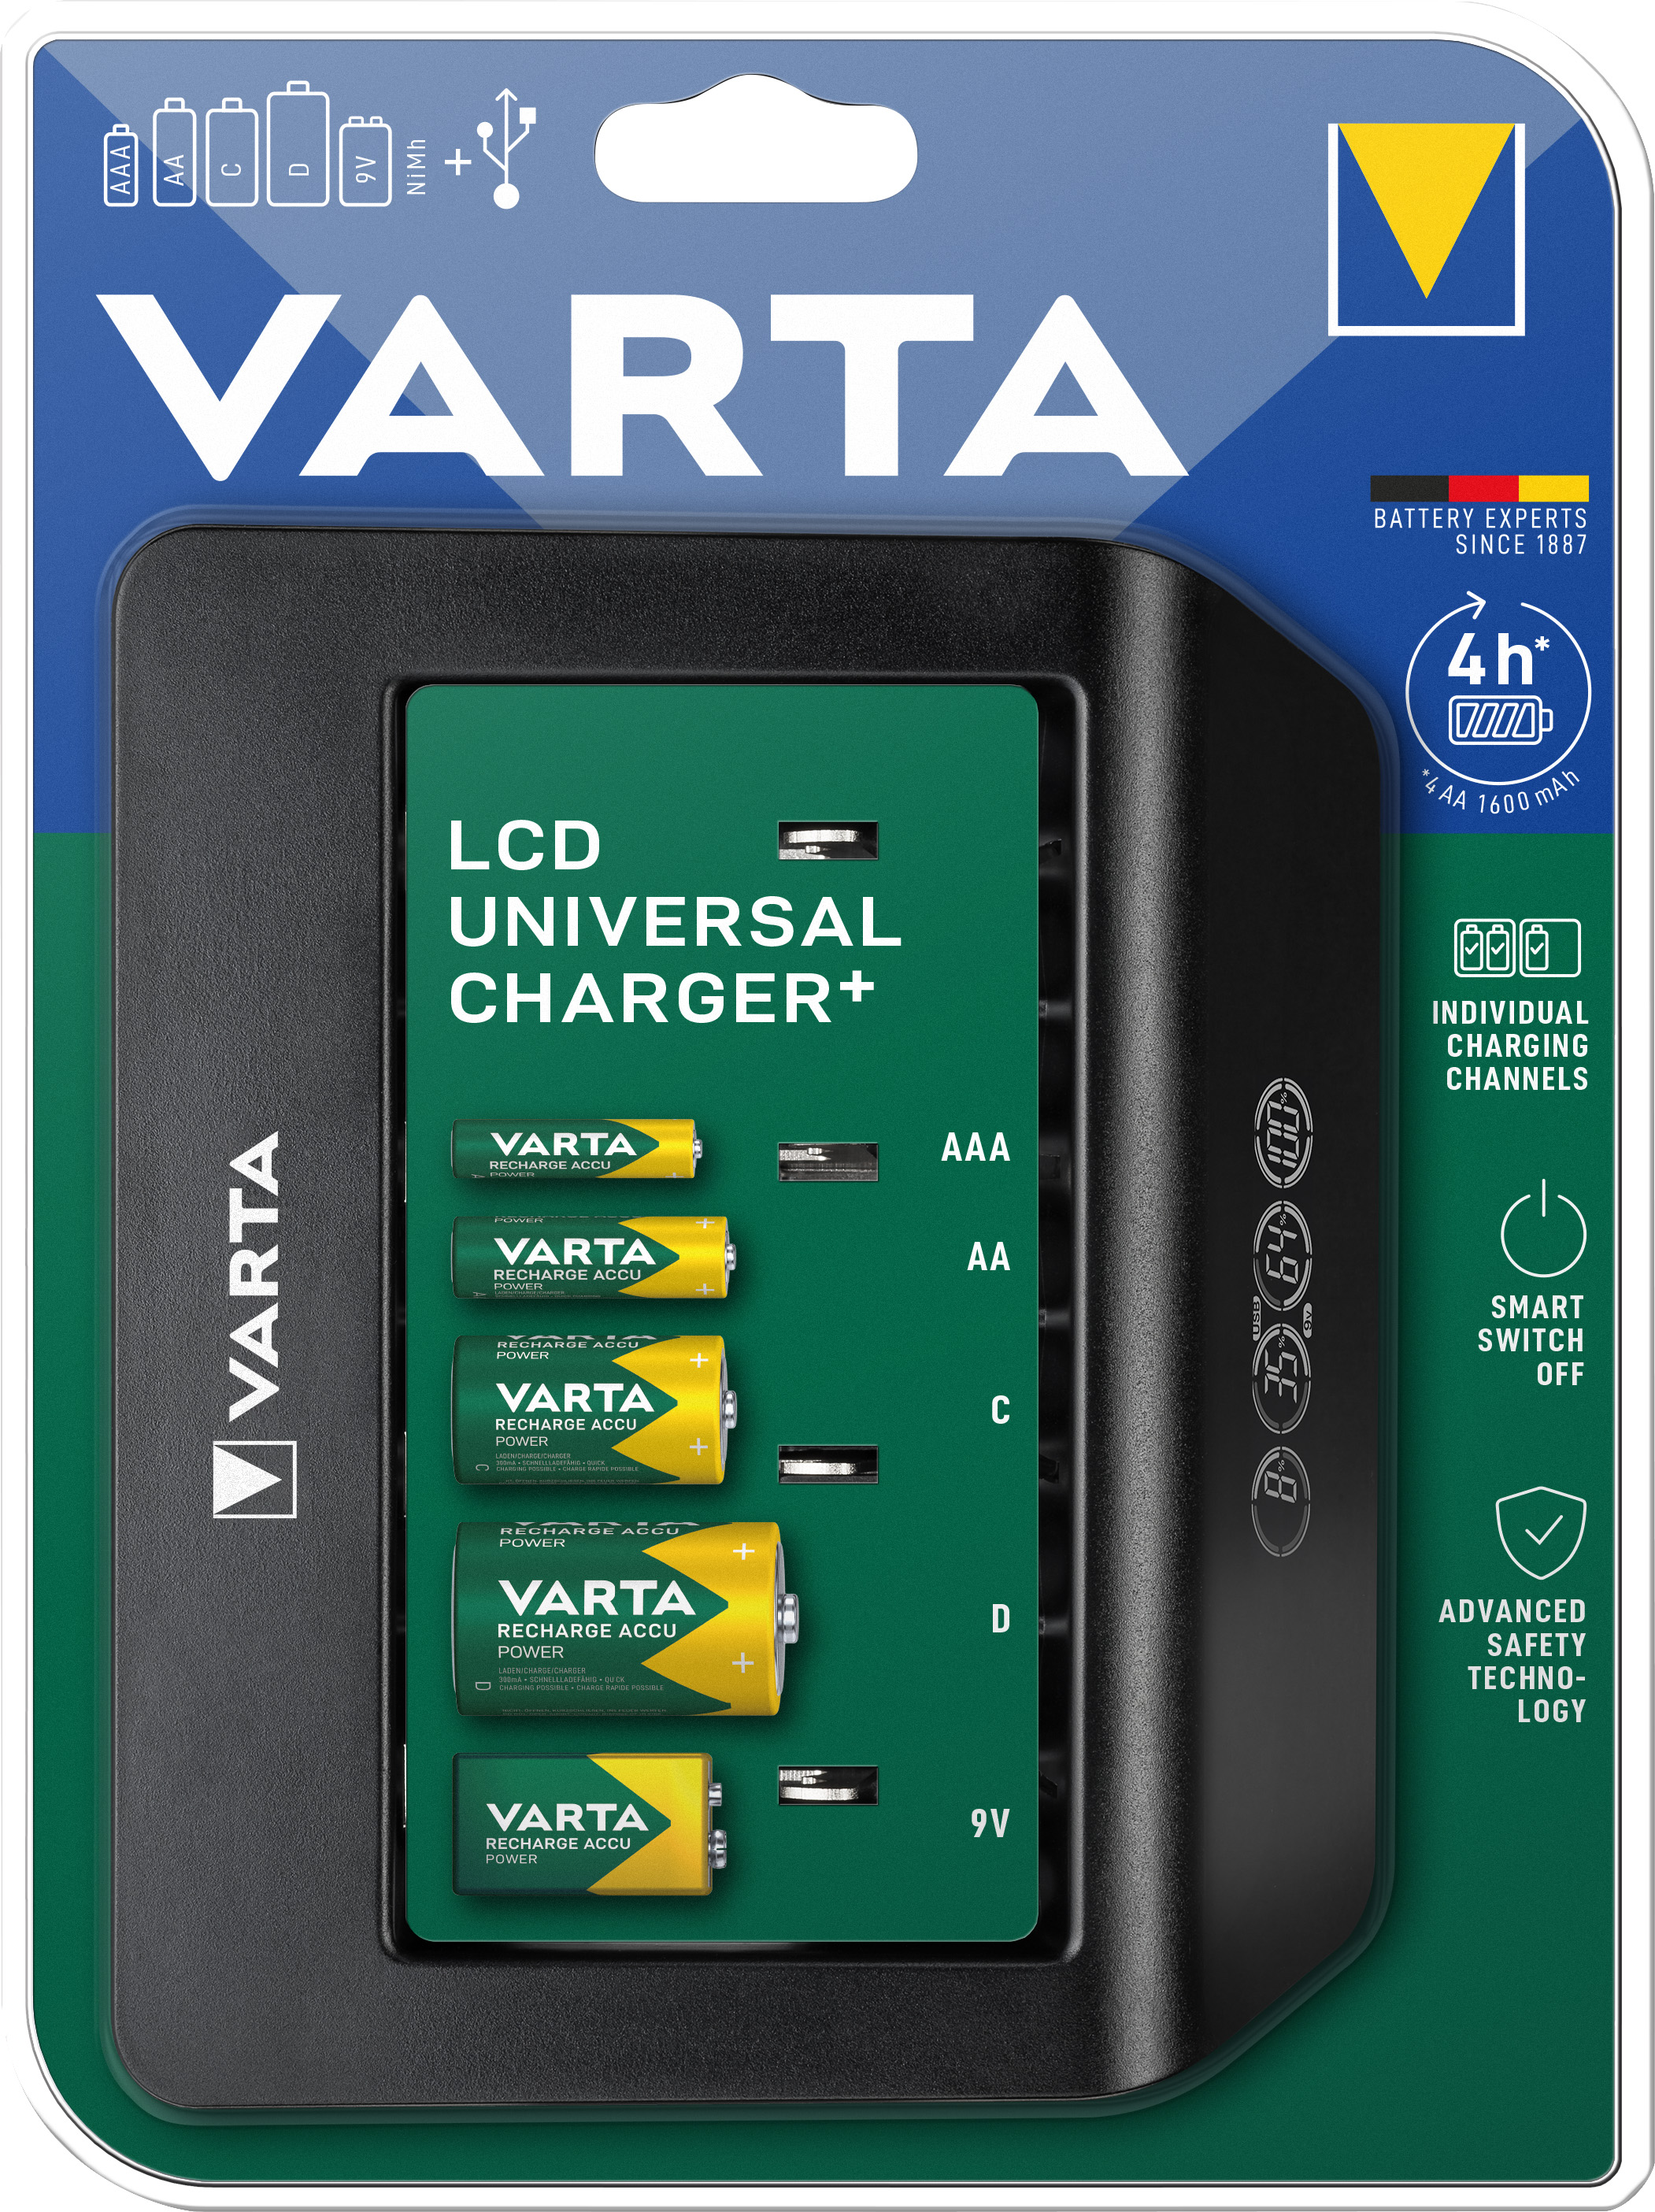 VARTA Ladegerät LCD NiMH, Akku Charger+ Grau verschiedene Ladegerät Universal für Größen Universal